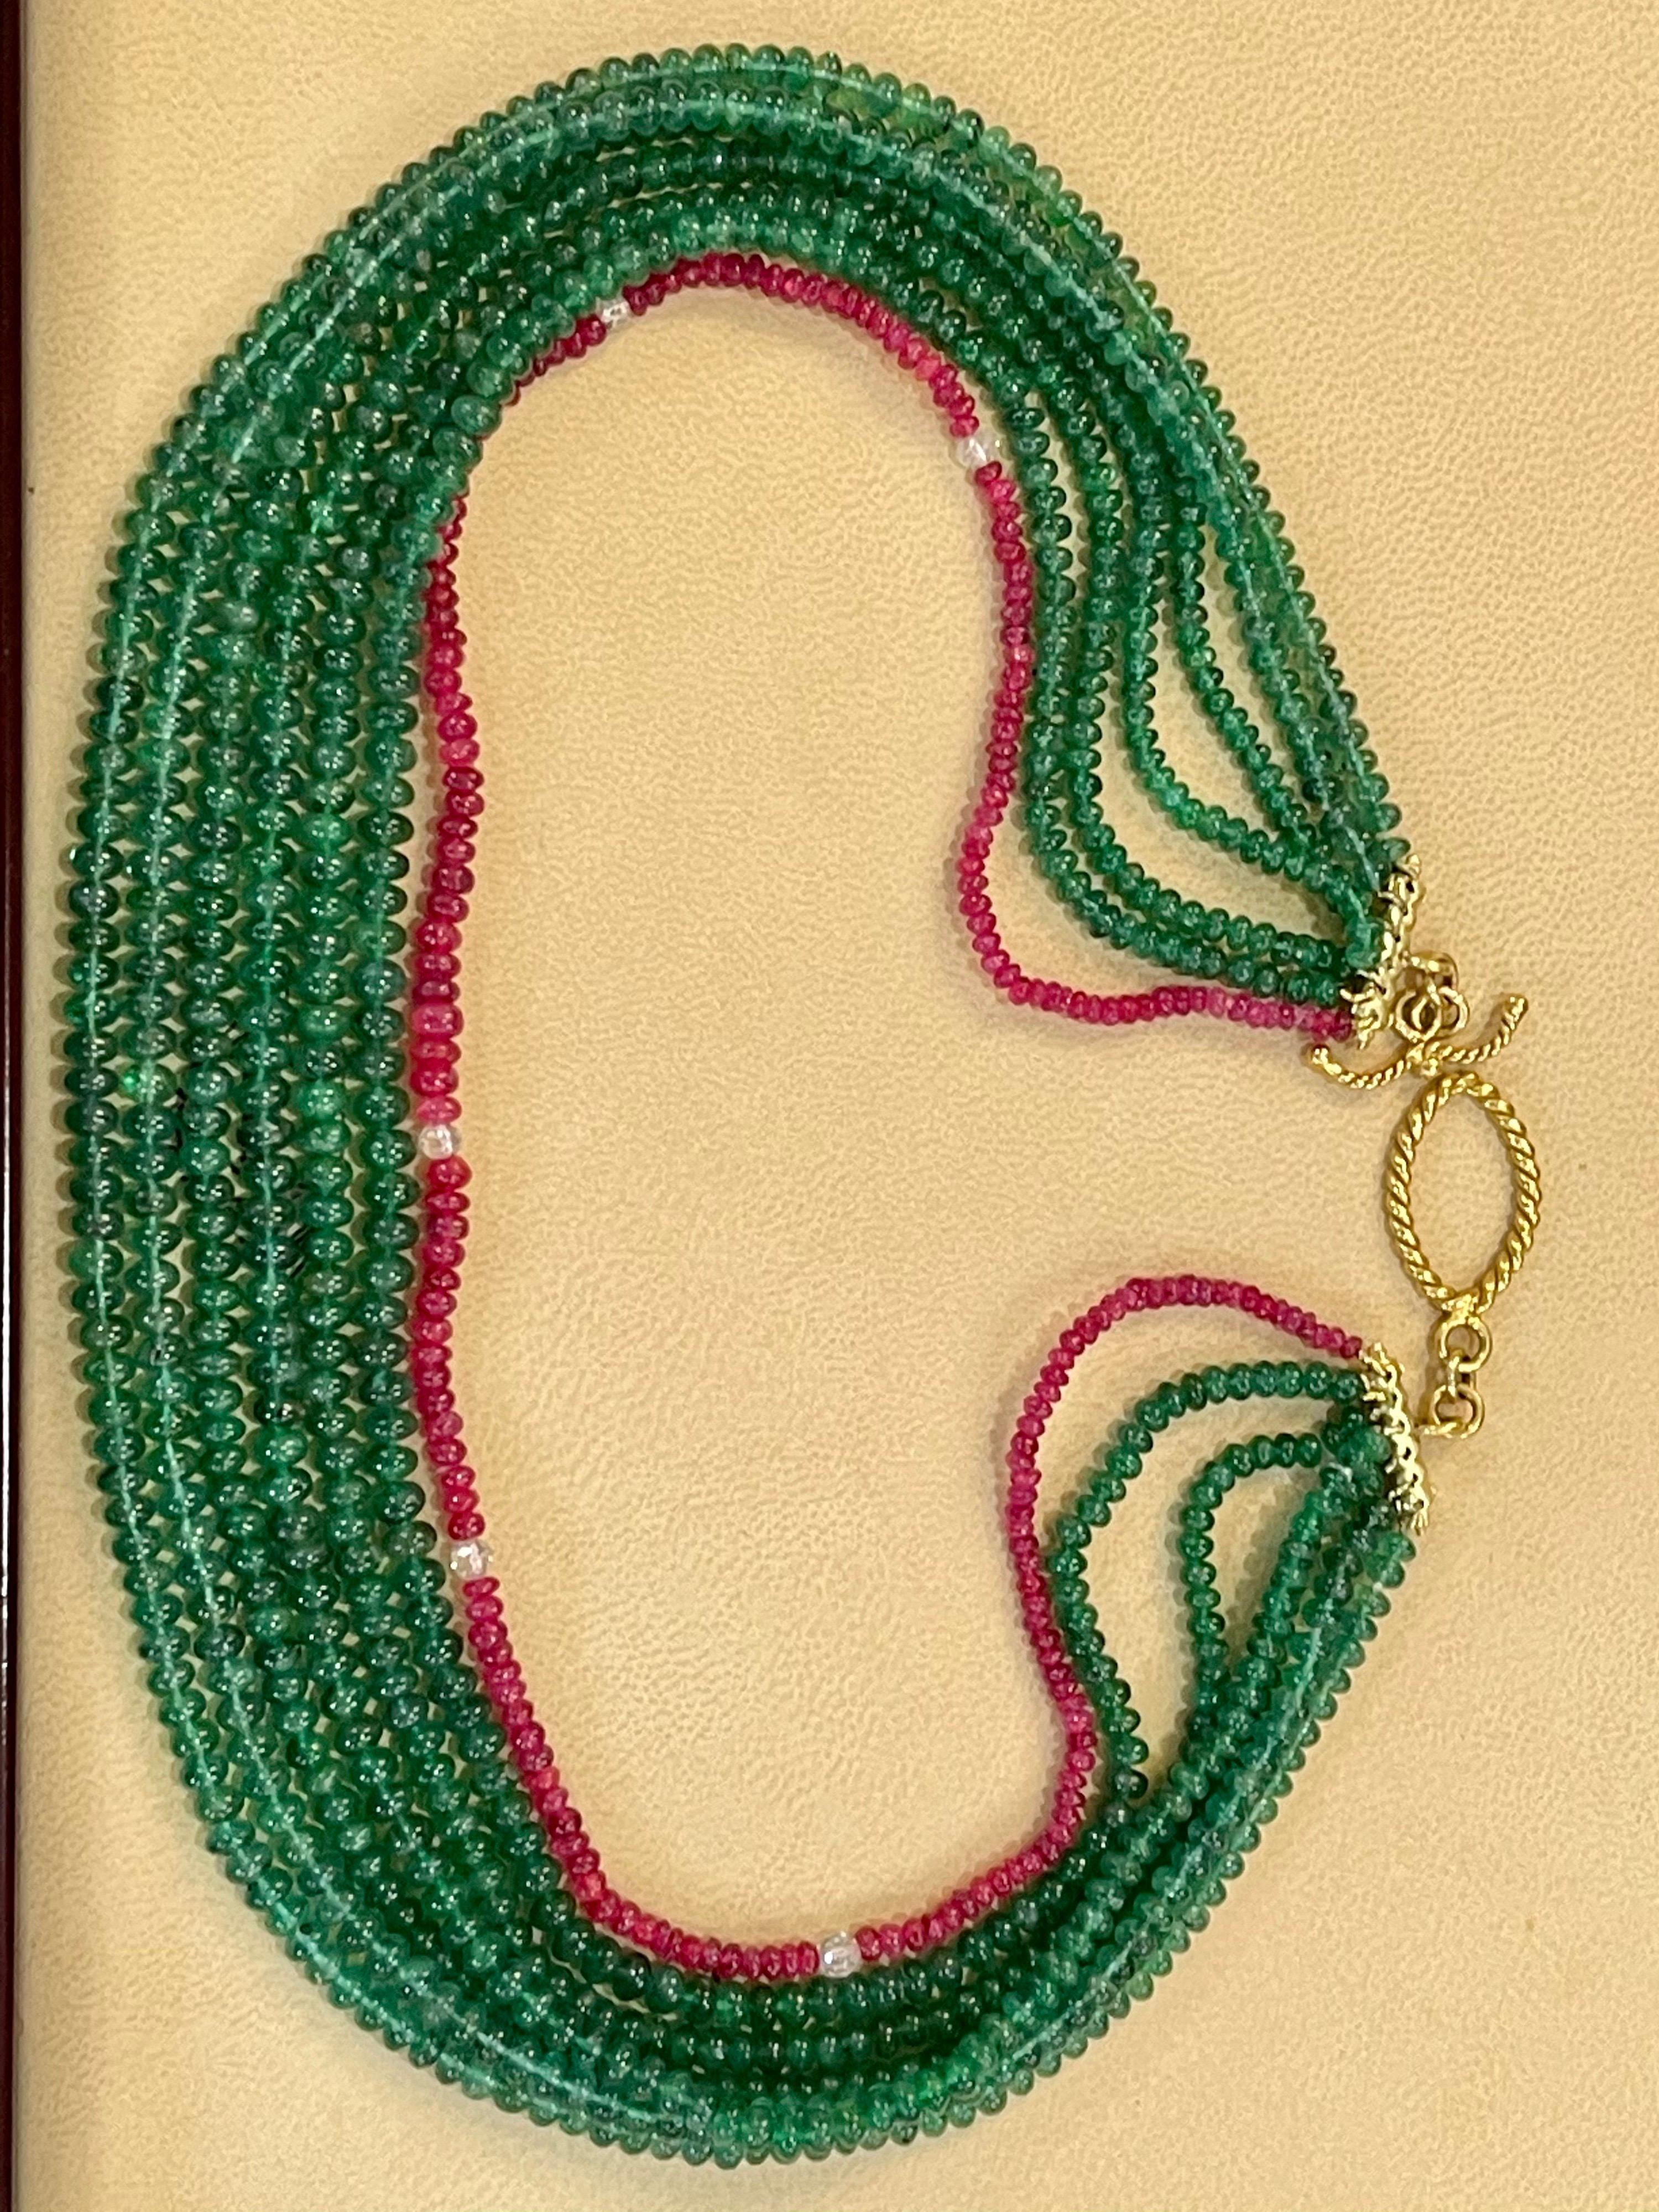 360 Carat Emerald, Burma Ruby and Diamond Beads Necklace 18 Karat Yellow Gold For Sale 3